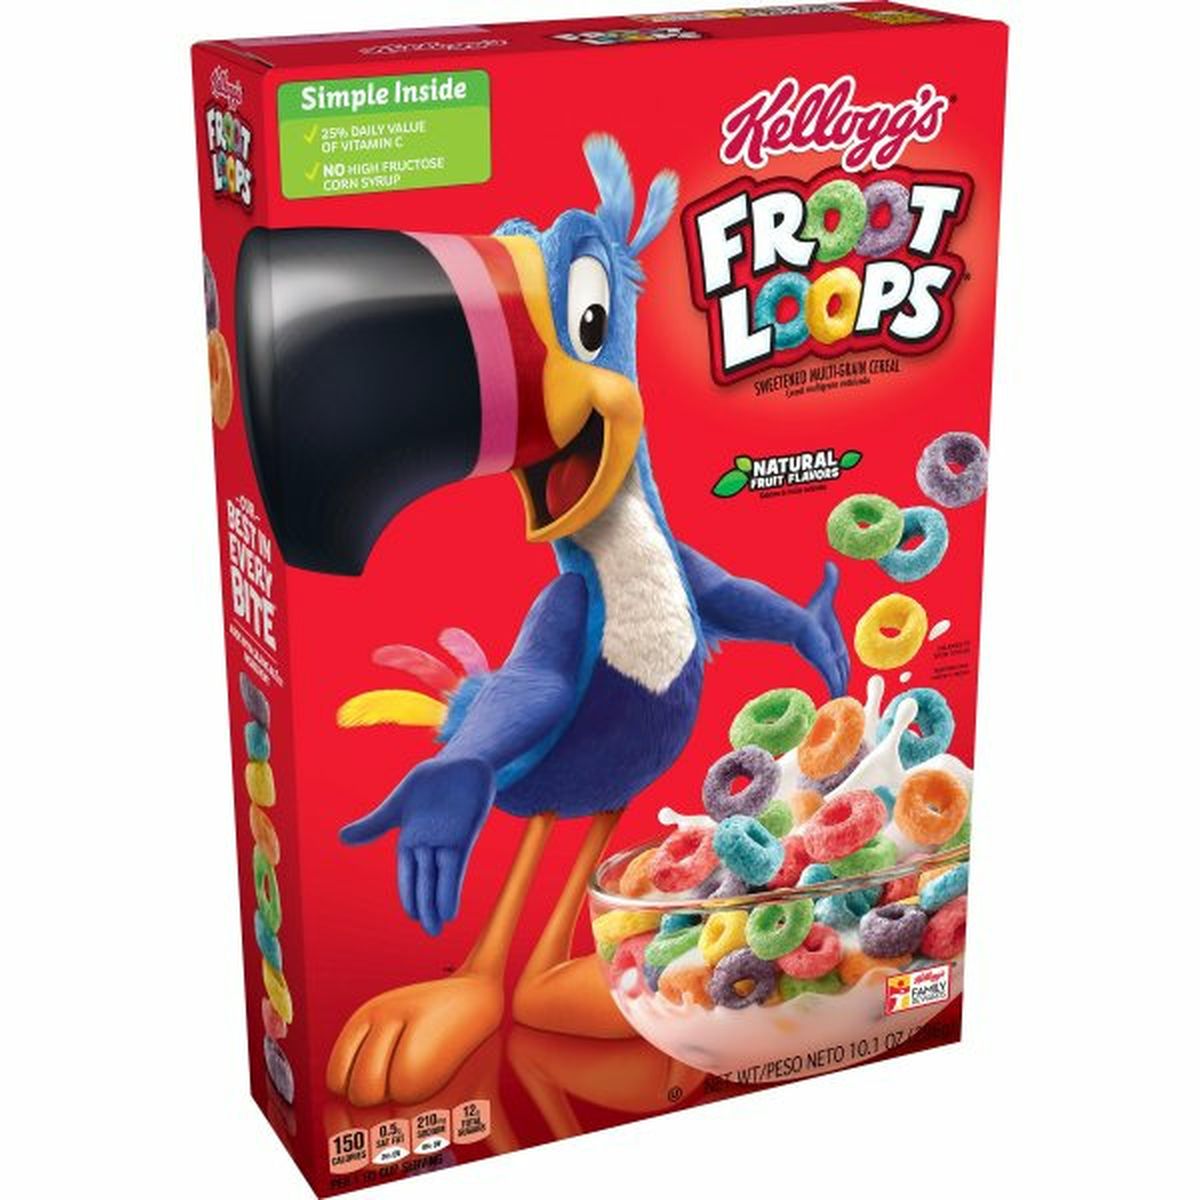 Calories in Kellogg's Froot Loops Cereal Kellogg's Froot Loops Breakfast Cereal, Original, Low Fat Food, 10.1oz